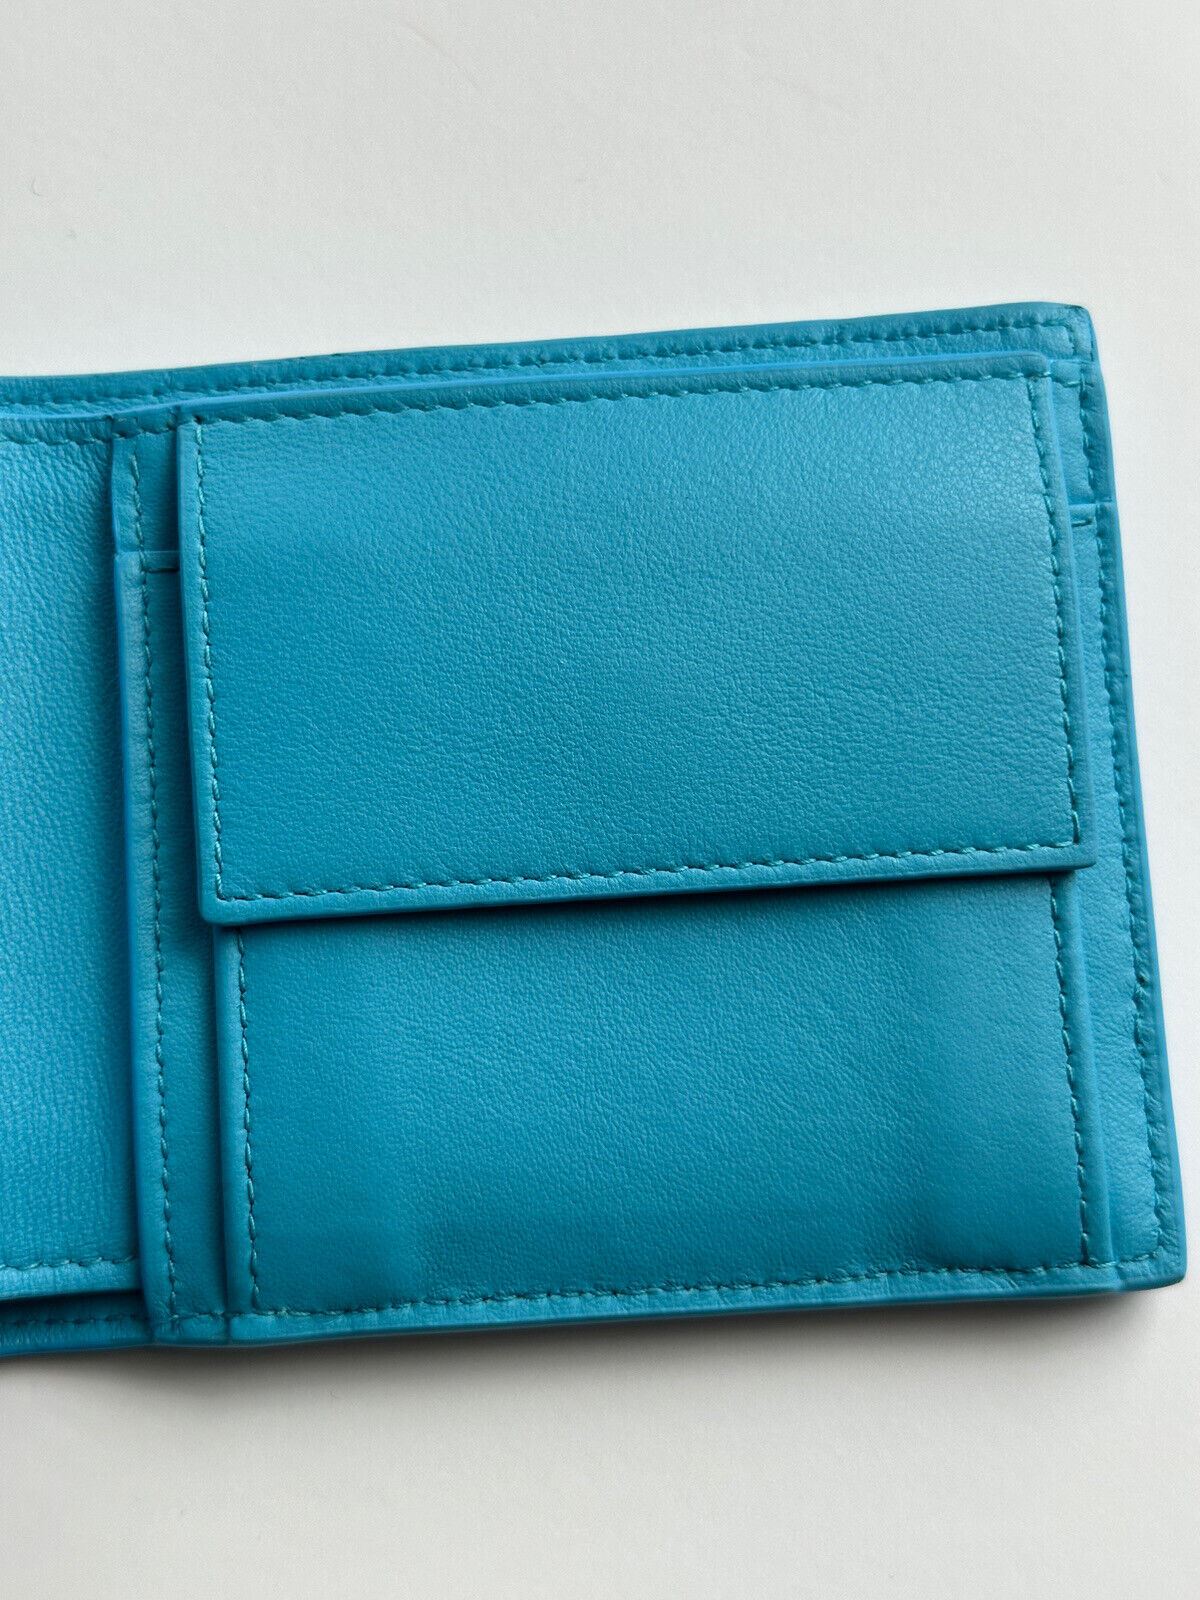 NWT $550 Bottega Veneta Intrecciato Leather Sky Blue Bi-fold Coin Wallet 605722